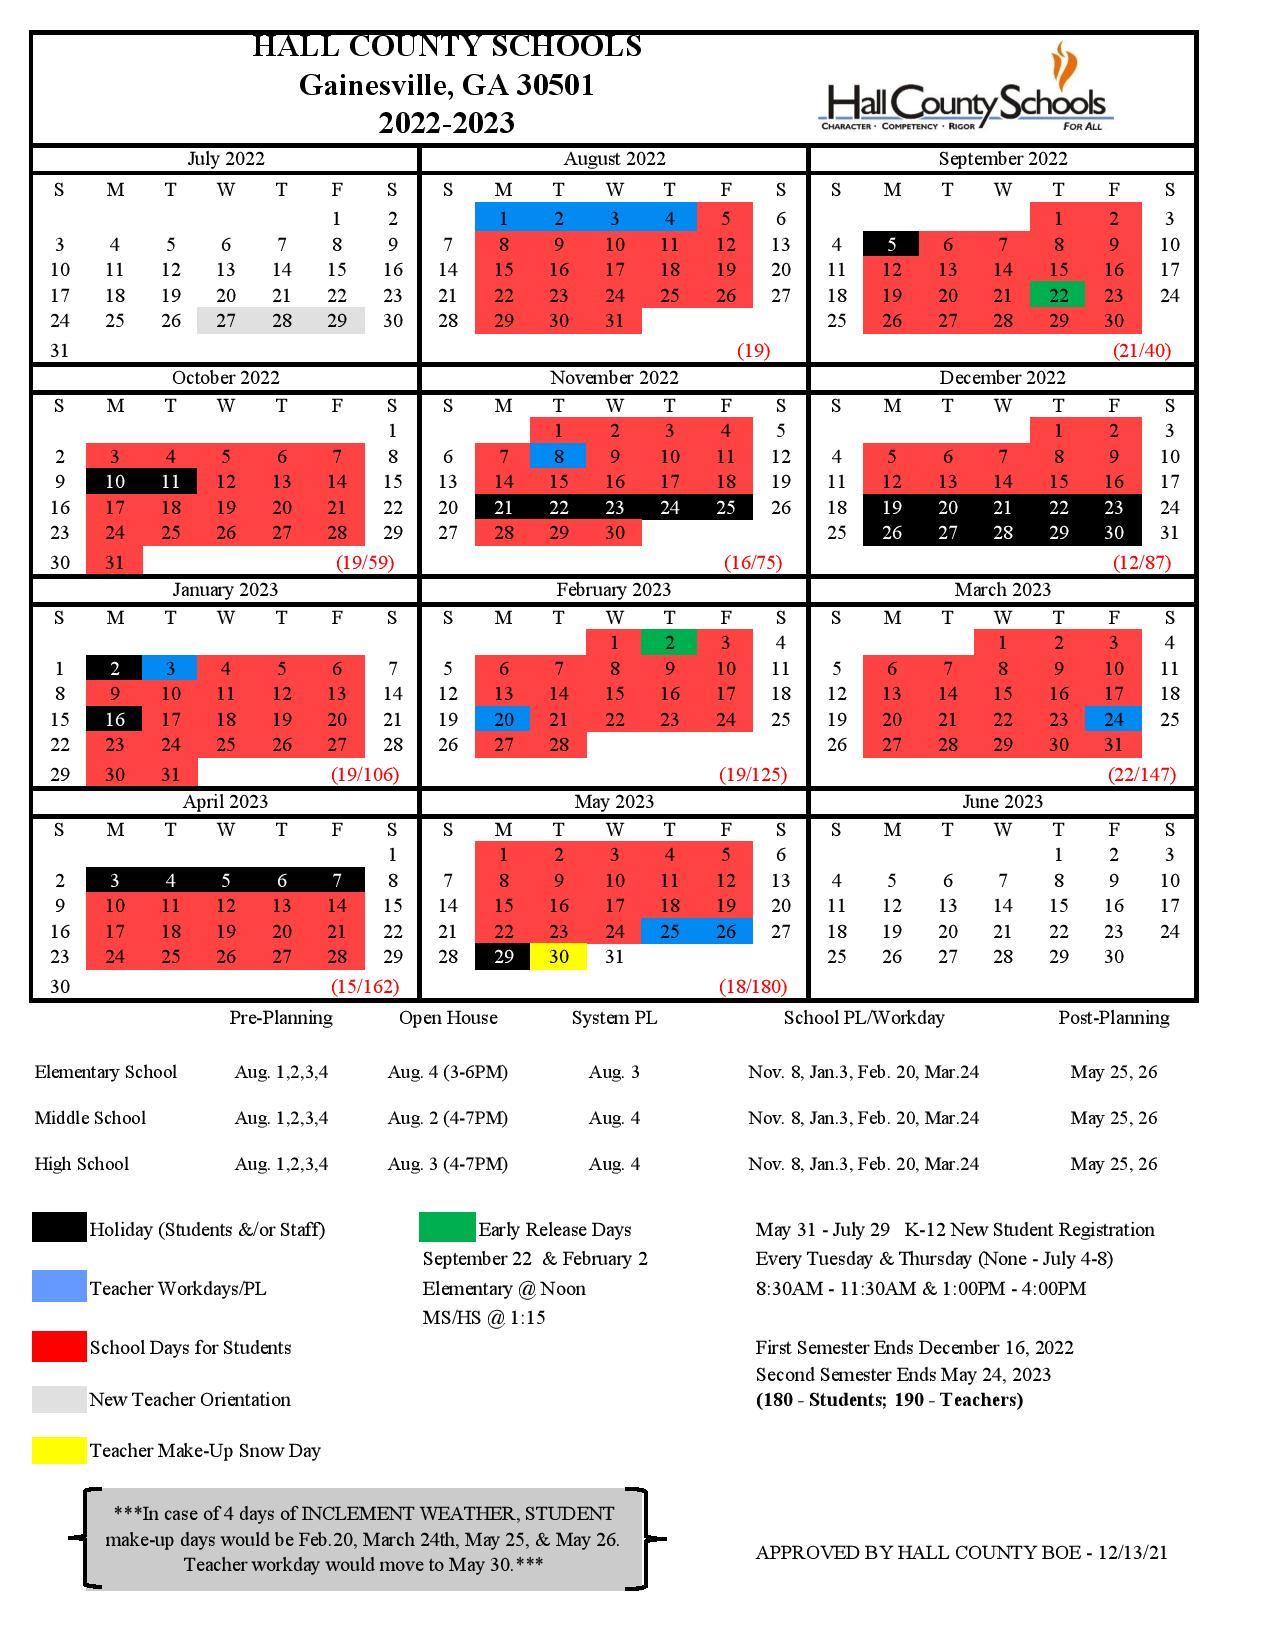 Hall County Schools Calendar 20222023 & Holidays